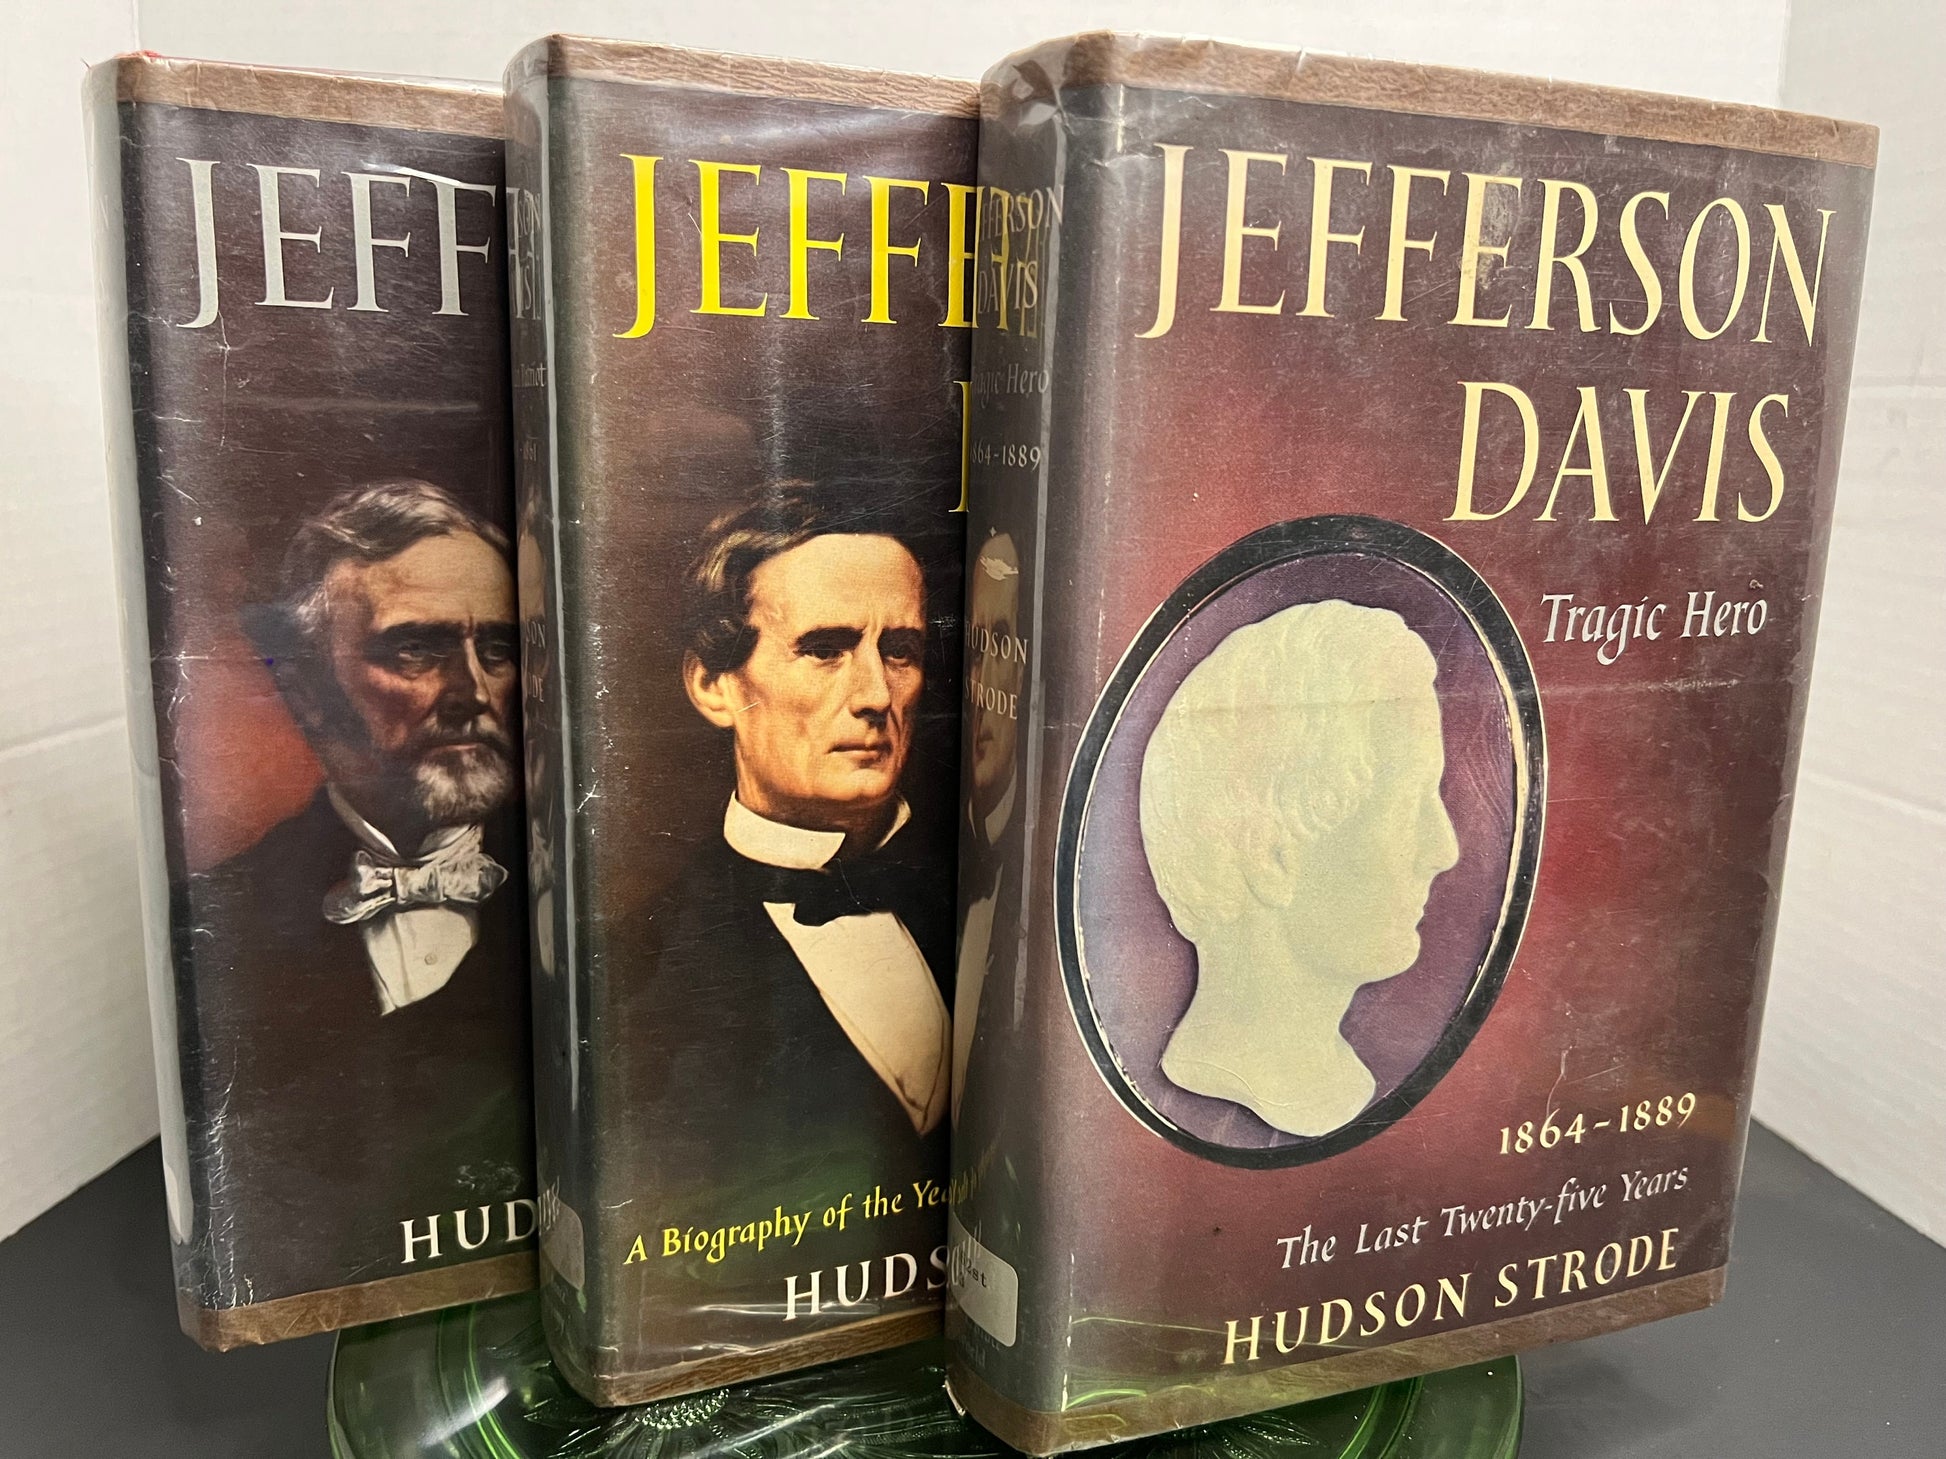 Vintage civil war Jefferson Davis 3 volume set Hudson strode 1964 first edition American history